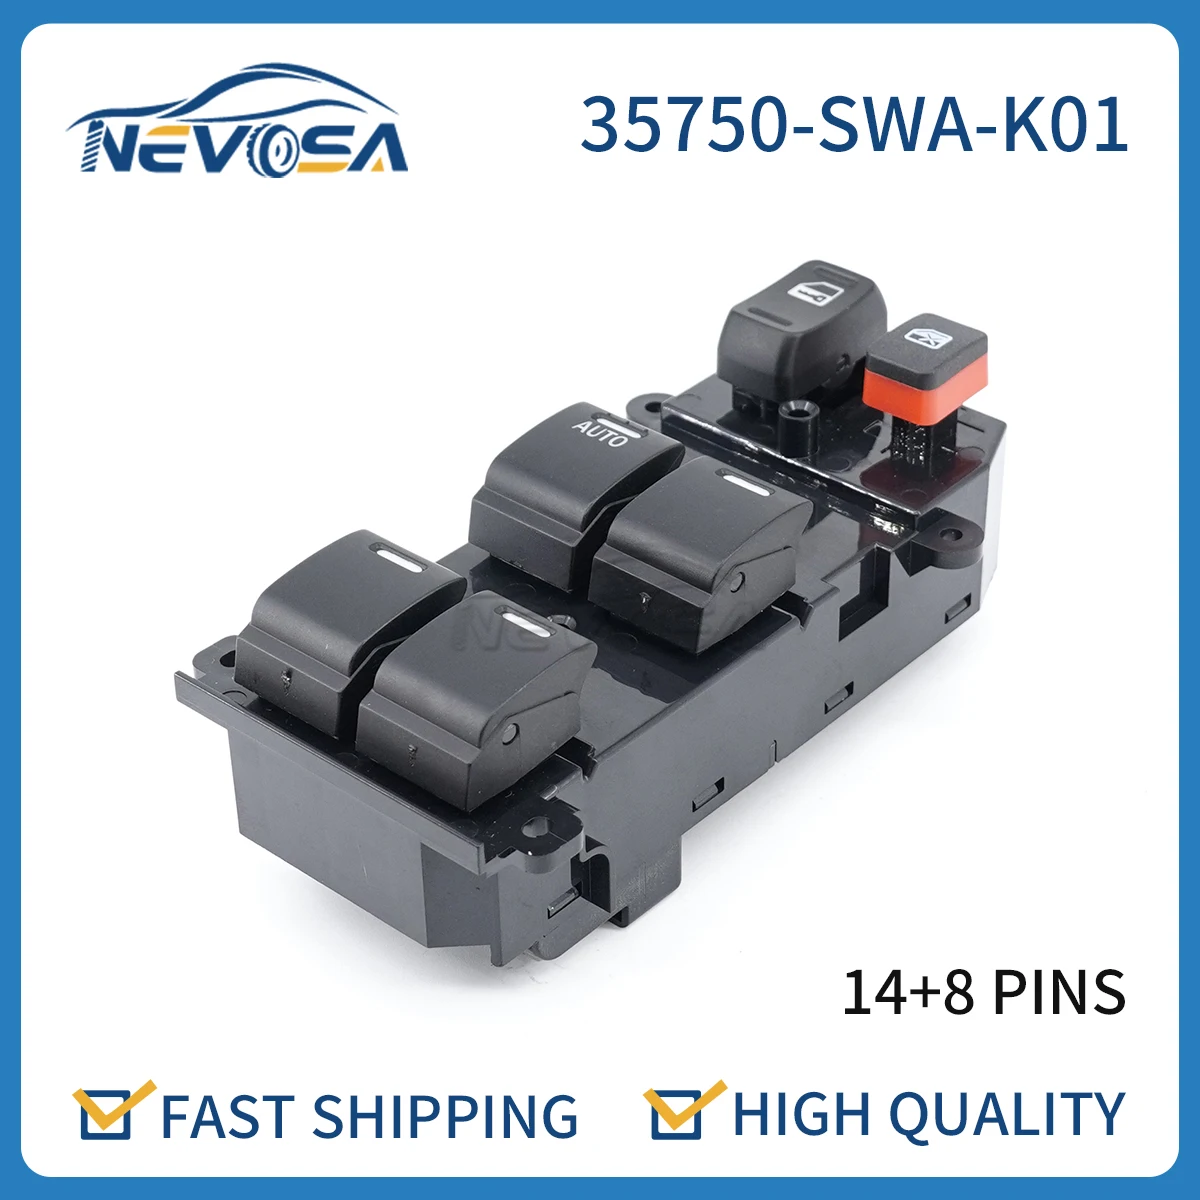 

Nevosa 35750-SWA-K01 Left LHD Car Power Window Regulator Control Switch For Honda CRV CR-V 2007-2011 35750SWAK01 car accessories